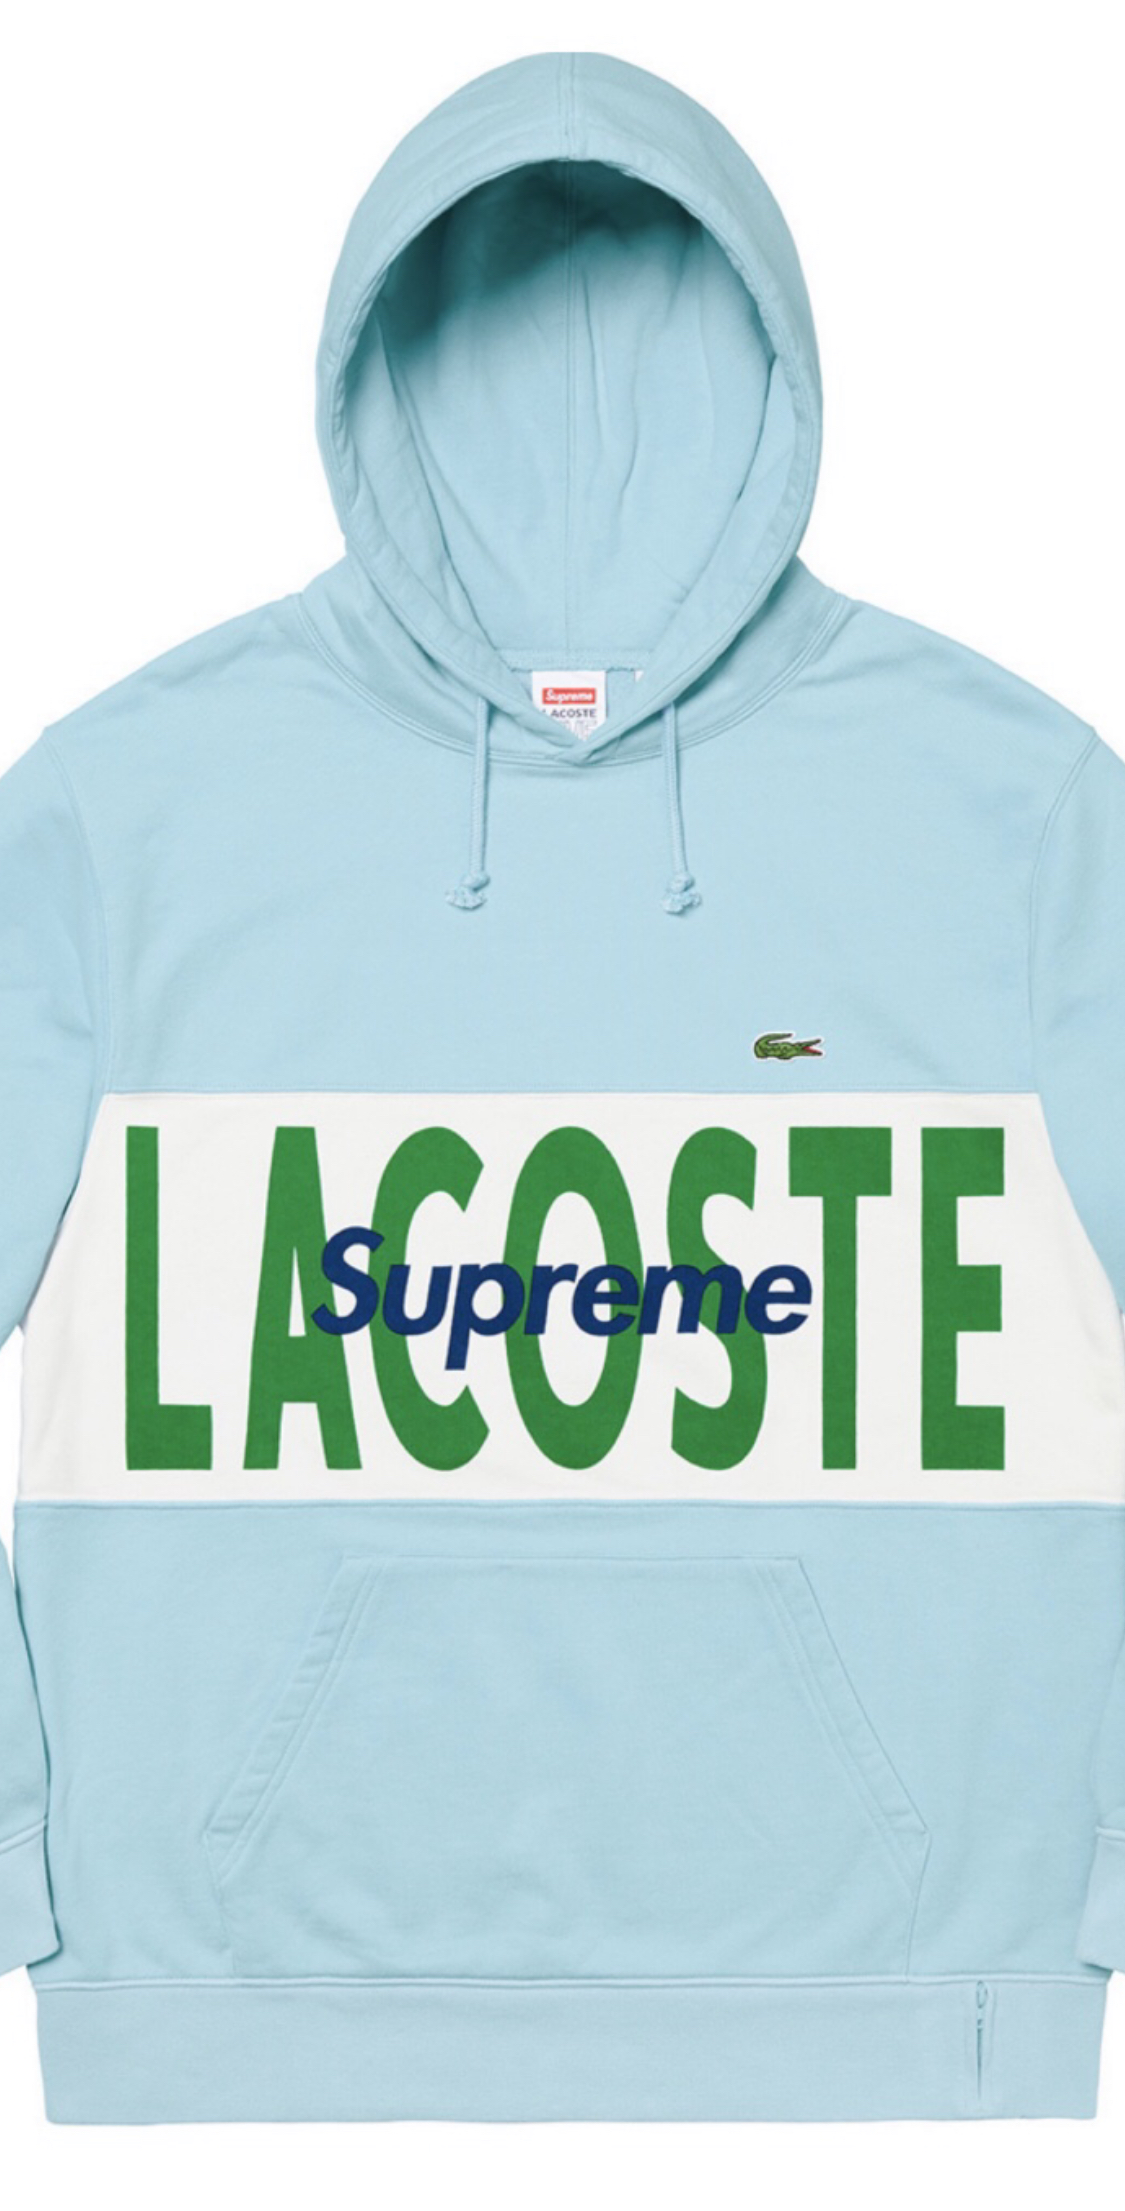 Supreme®/LACOSTE Logo Panel Hooded Sweatshirt – Light Blue - AuthentKicks